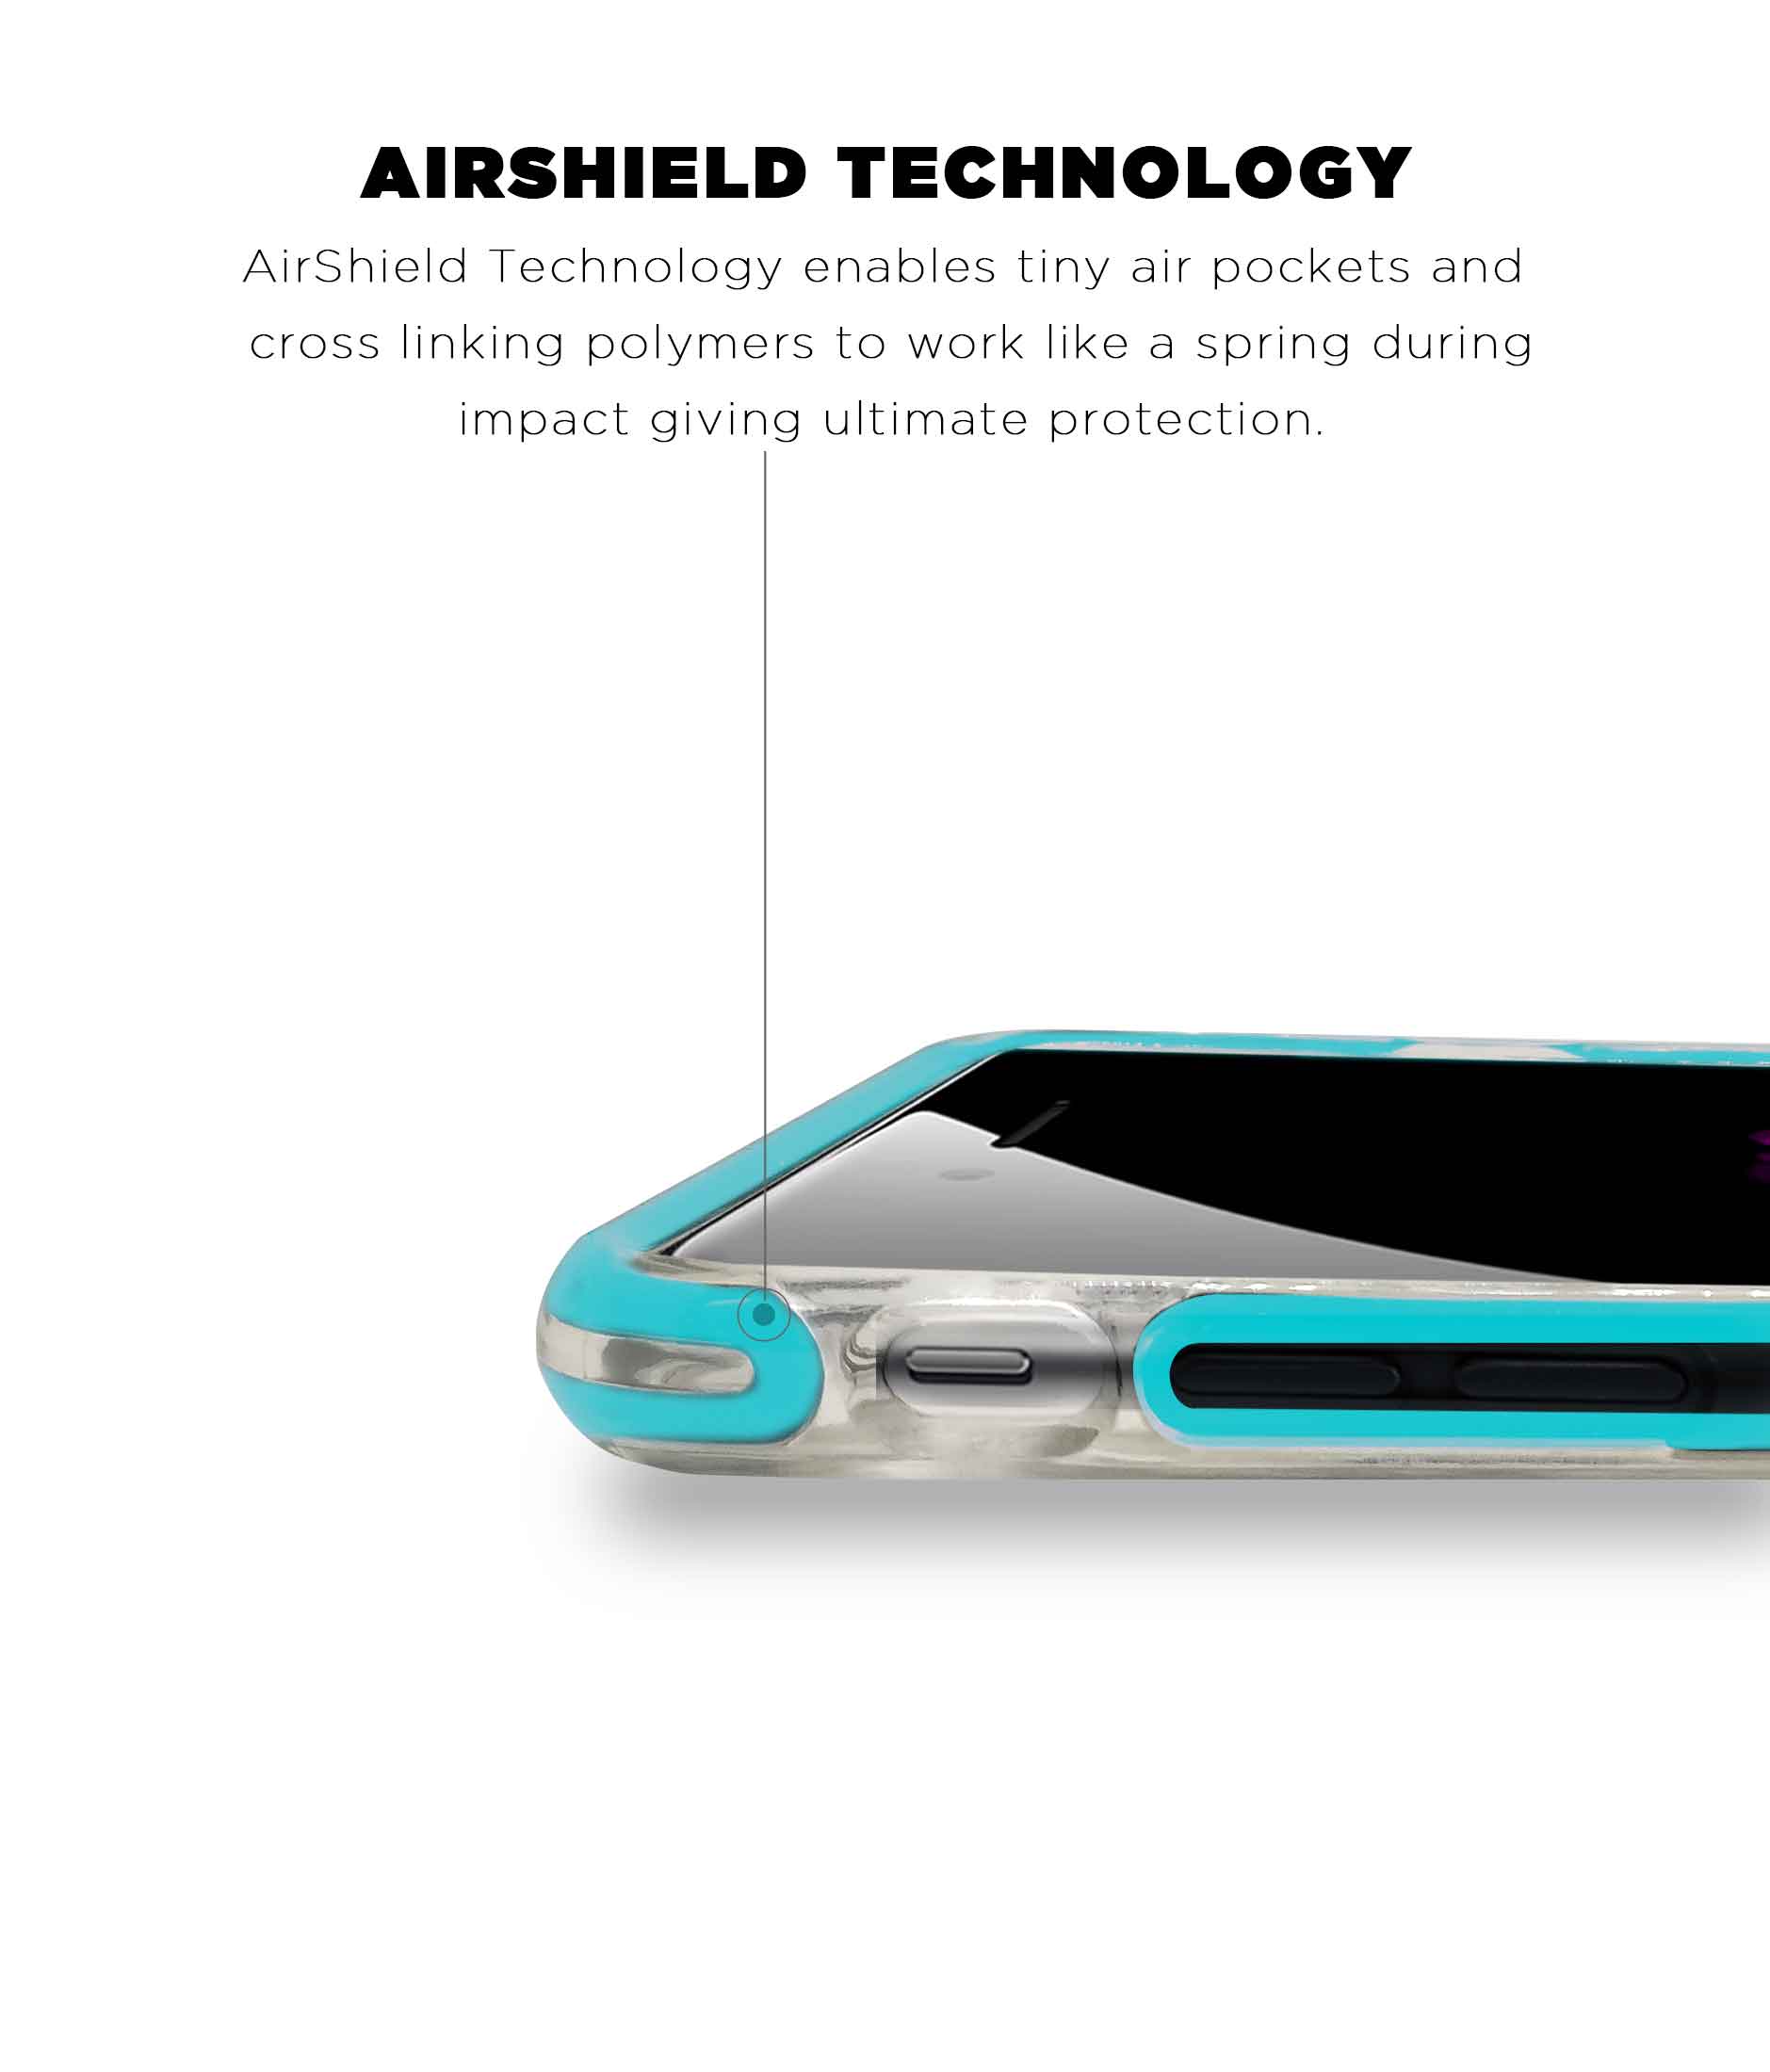 Crest Gryffindor - Extreme Phone Case for iPhone SE (2020)